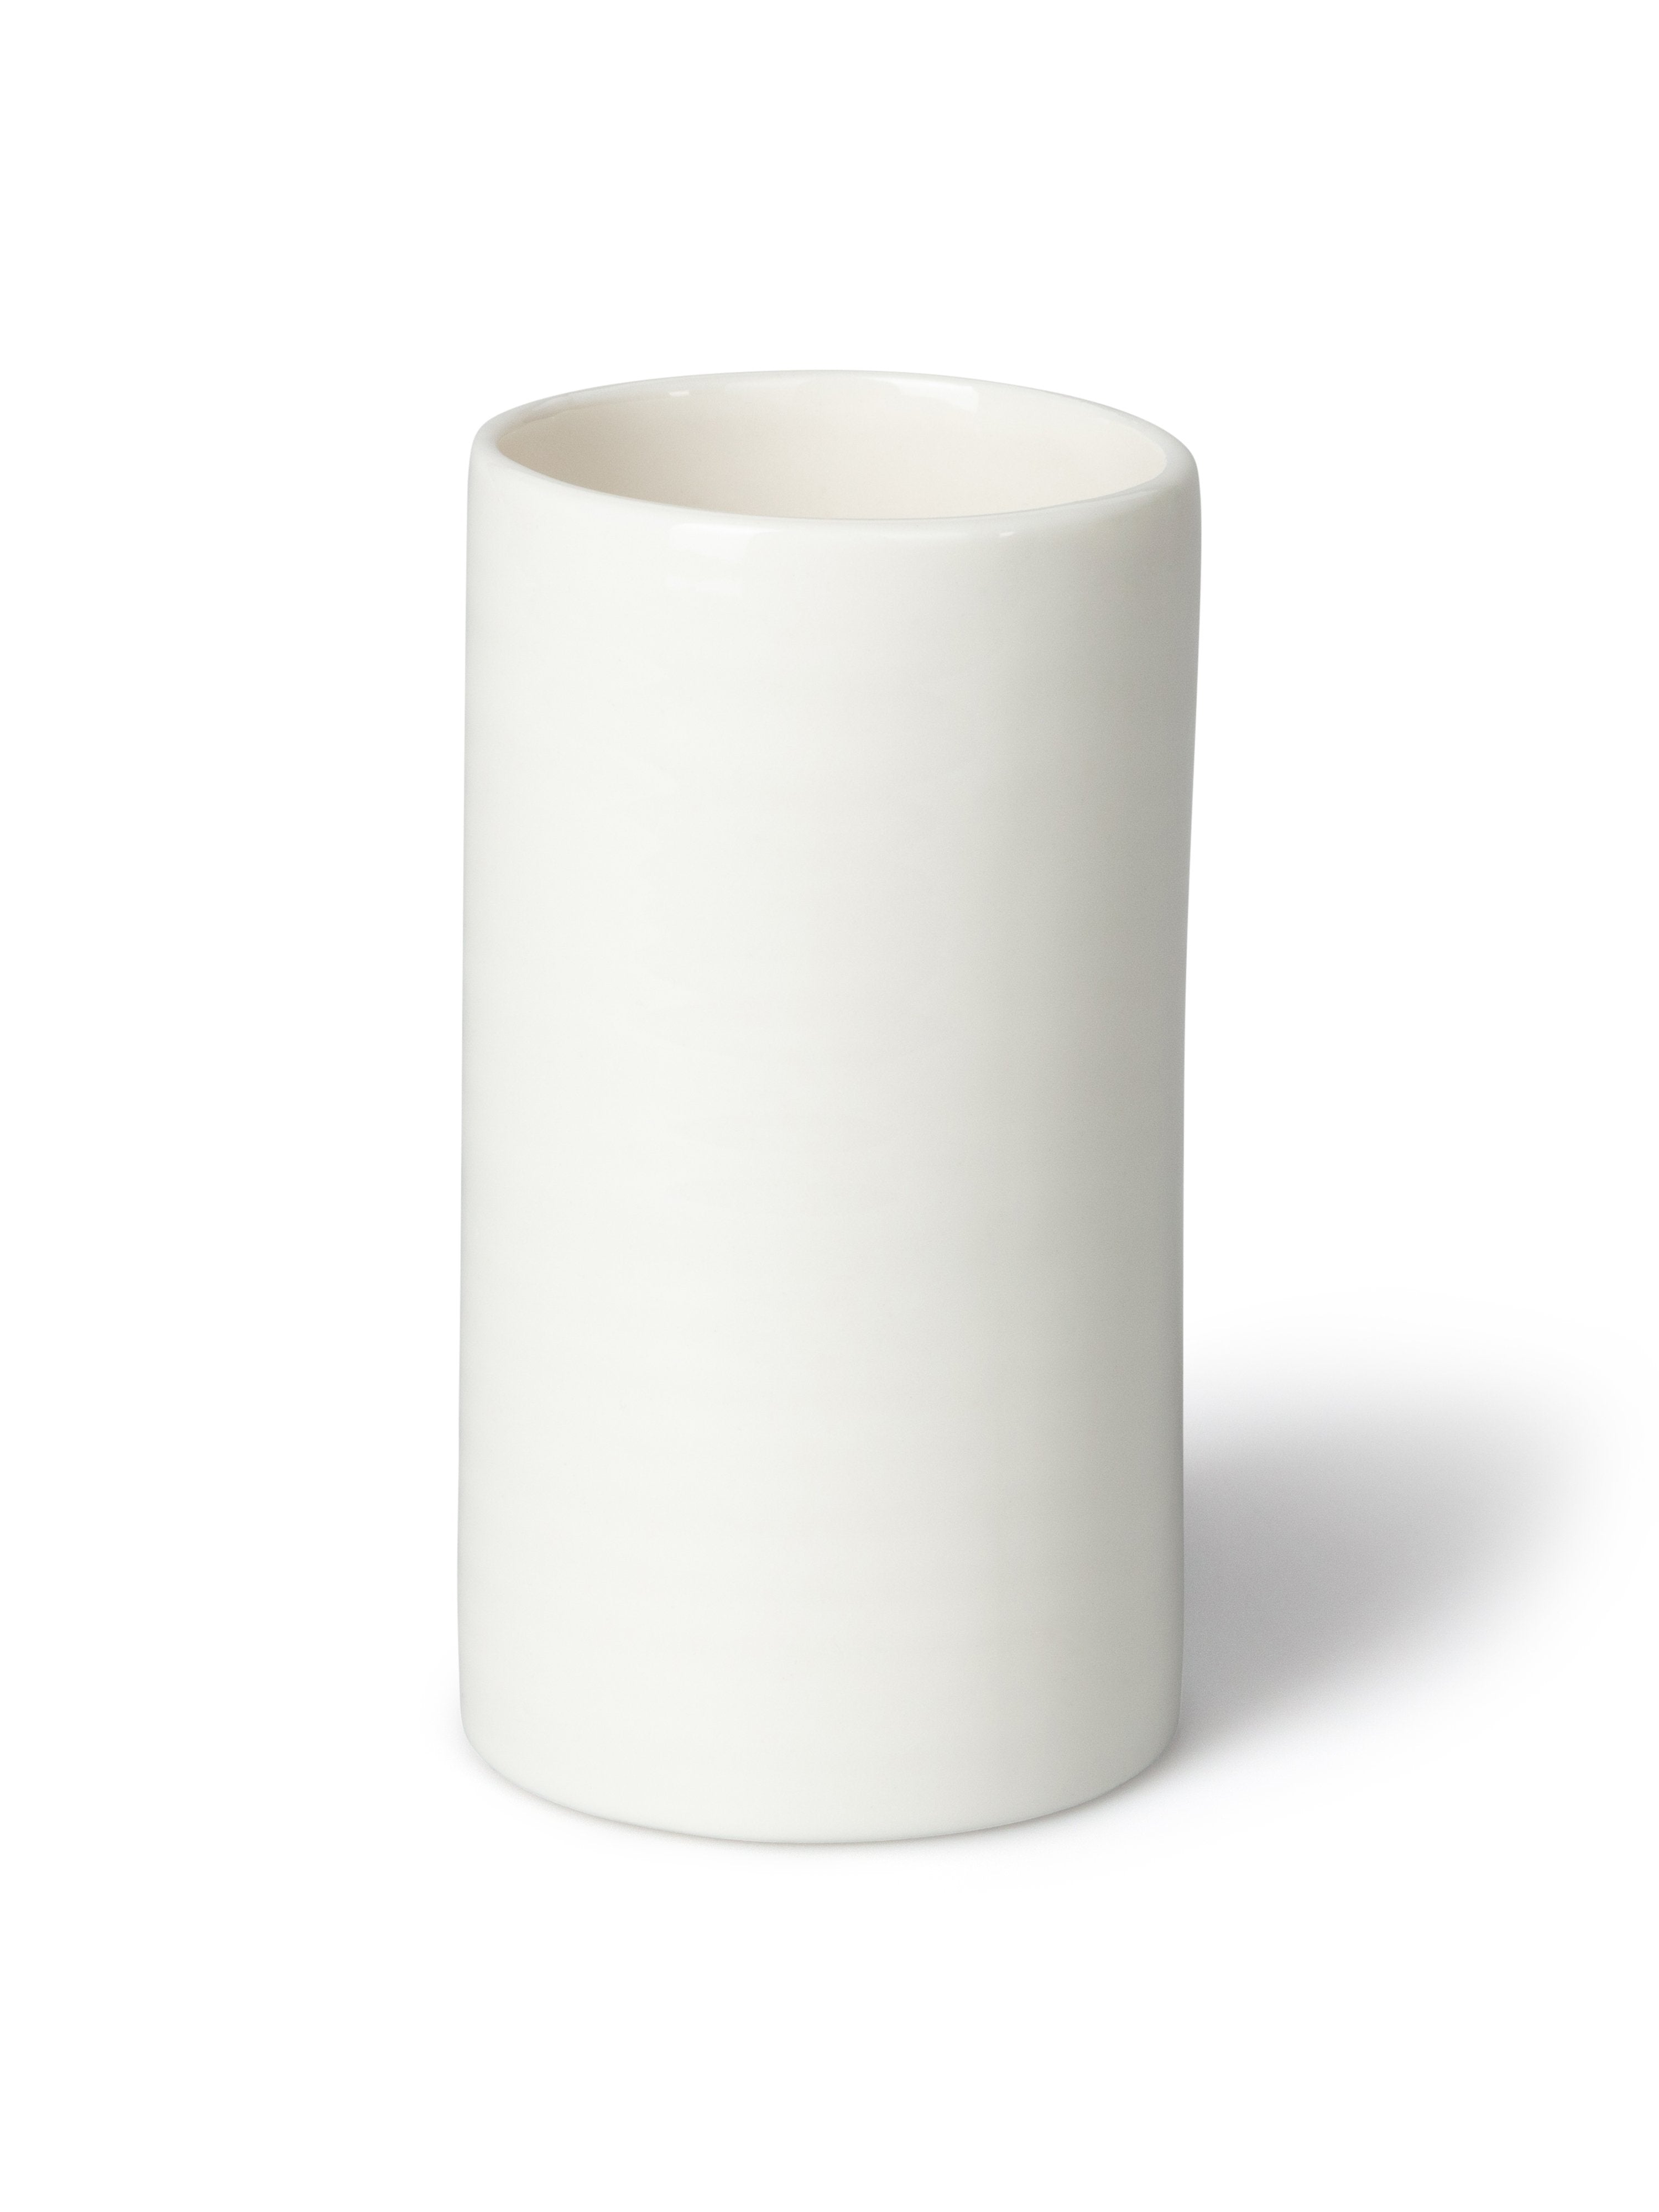 Porcelain Tall Pot